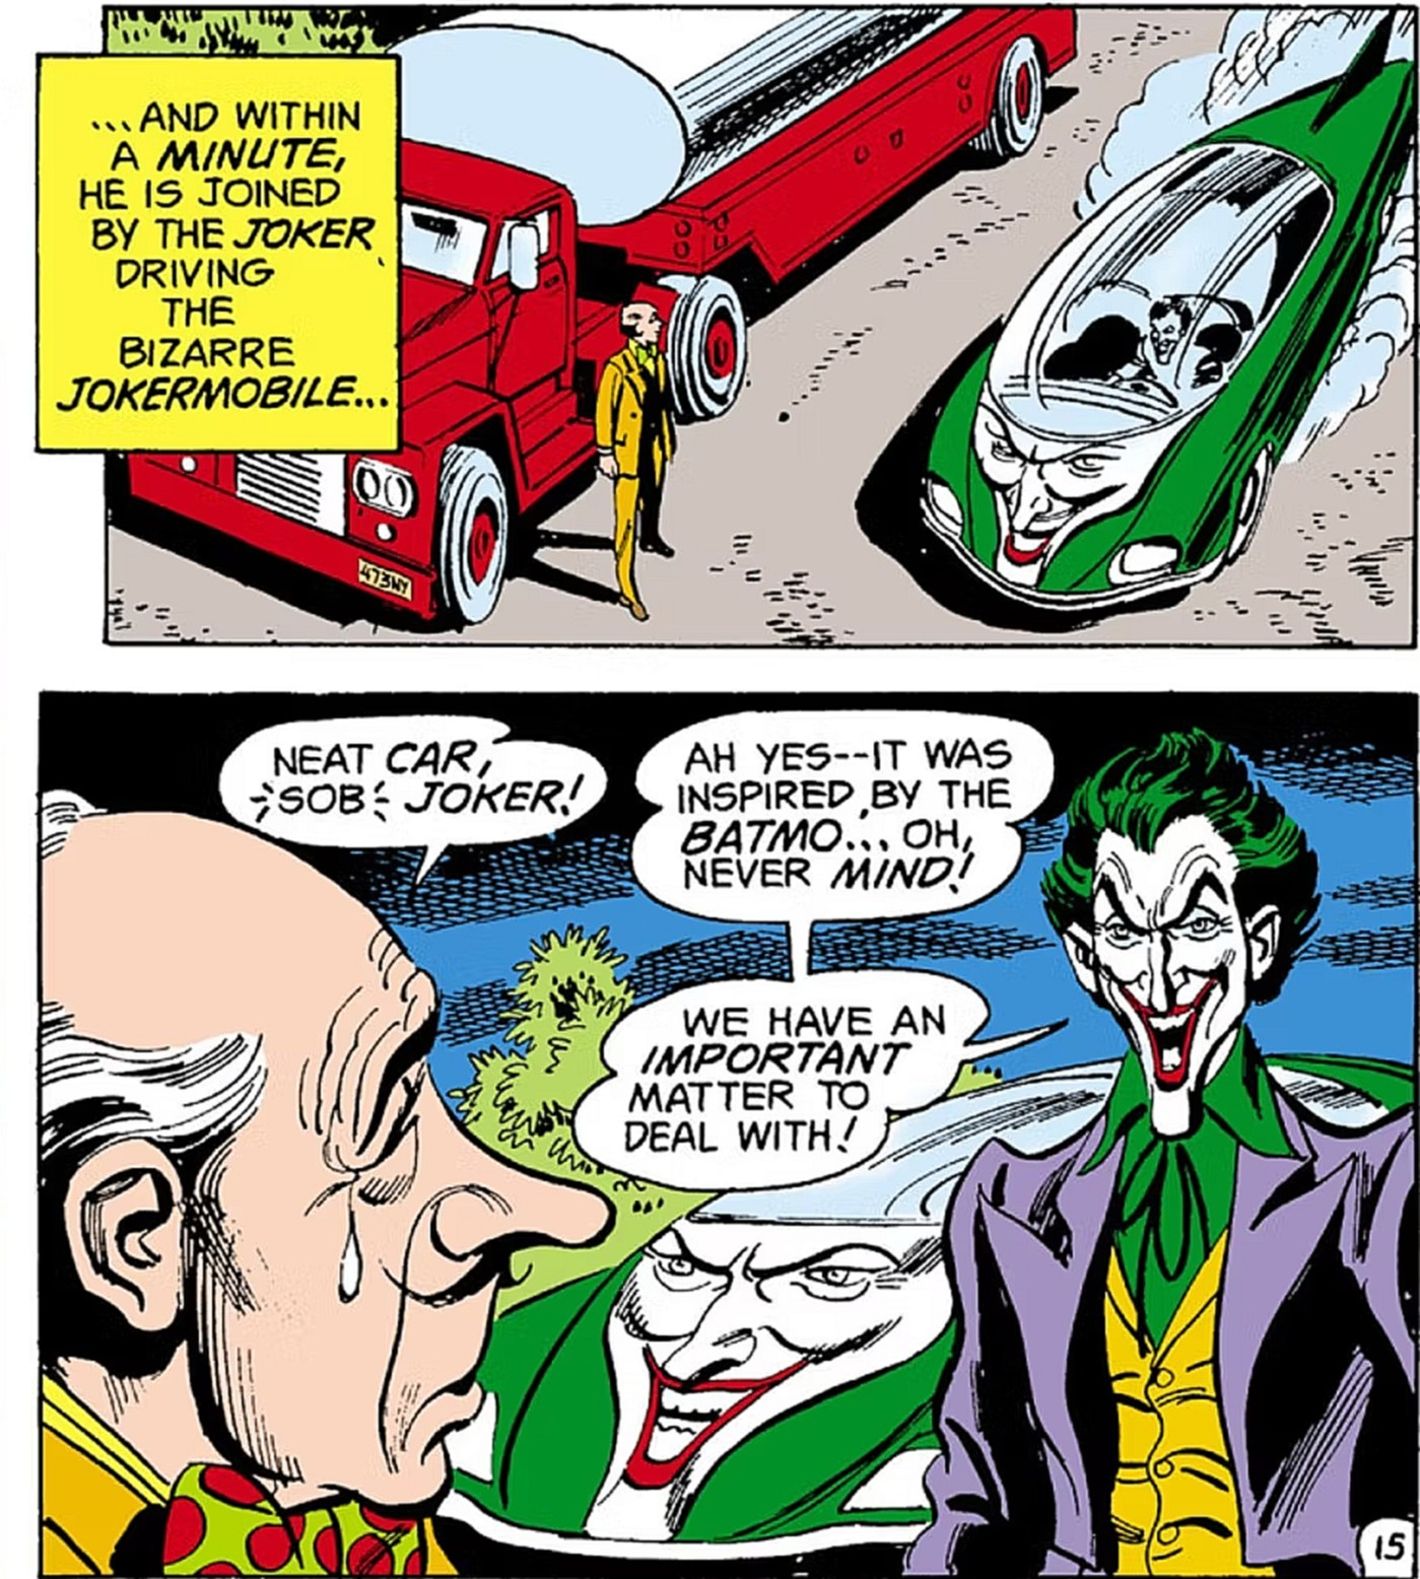 Joker notes that his Jokermobile is inspired by the Batmobile